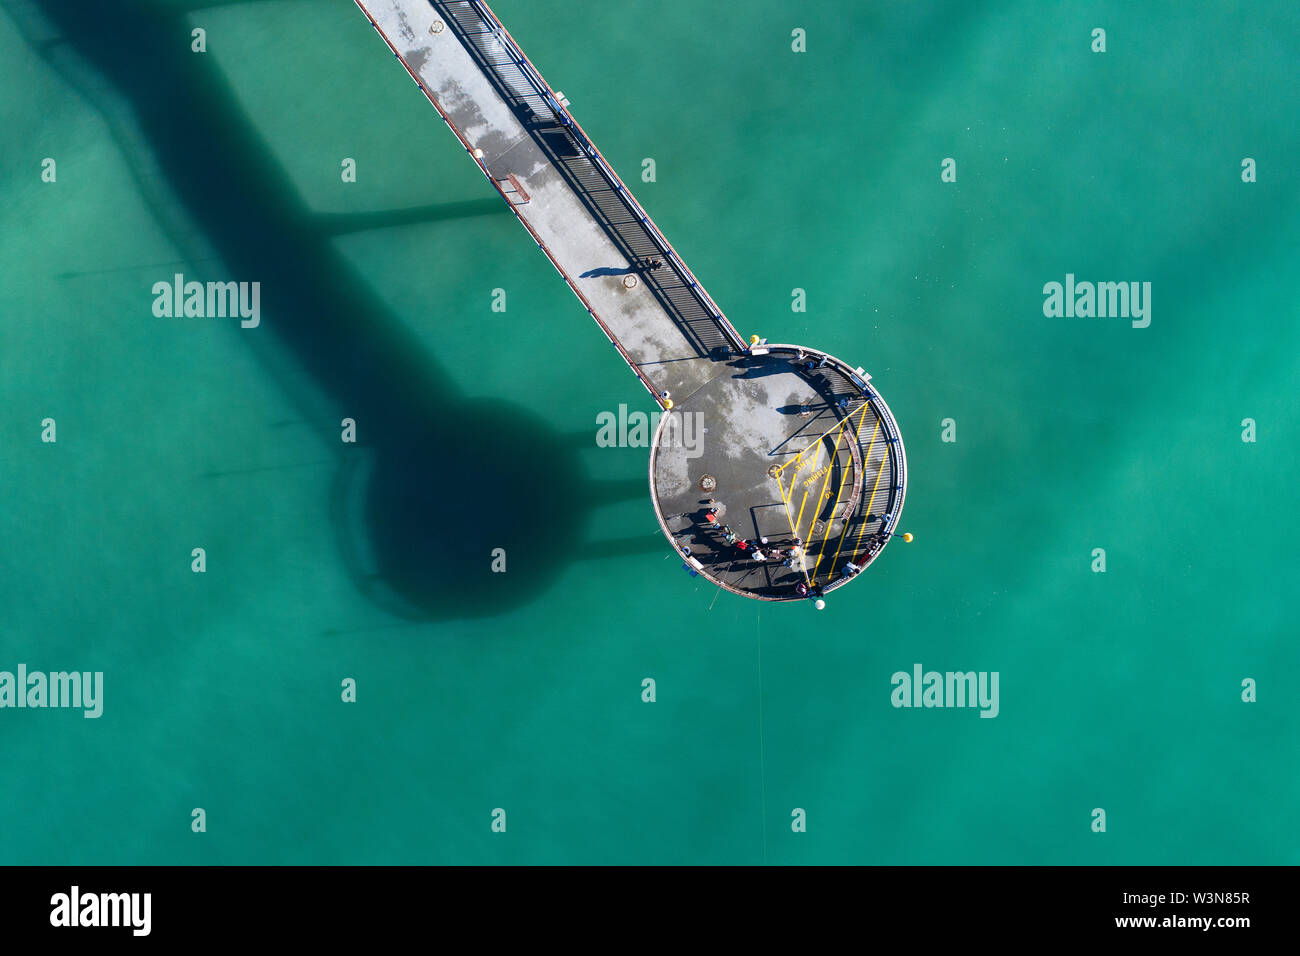 New Brighton Pier, Christchurch, Canterbury, South Island, New Zealand - drone aerial Stock Photo